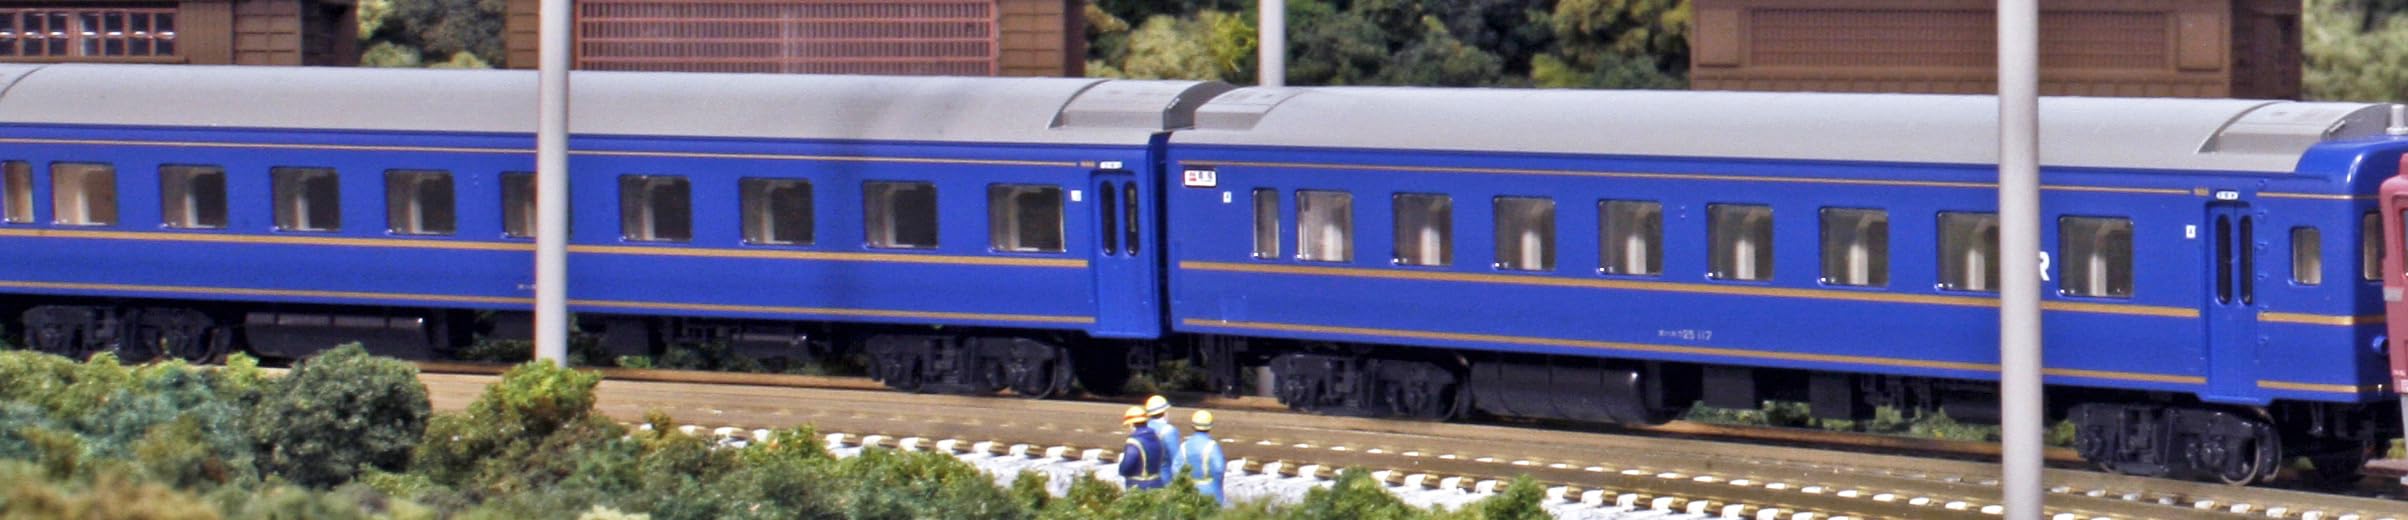 Kato N Spur 24 Serie Japan Nihonkai Sleeper Limited Express 6 Wagen Set 10-881 Eisenbahnmodell